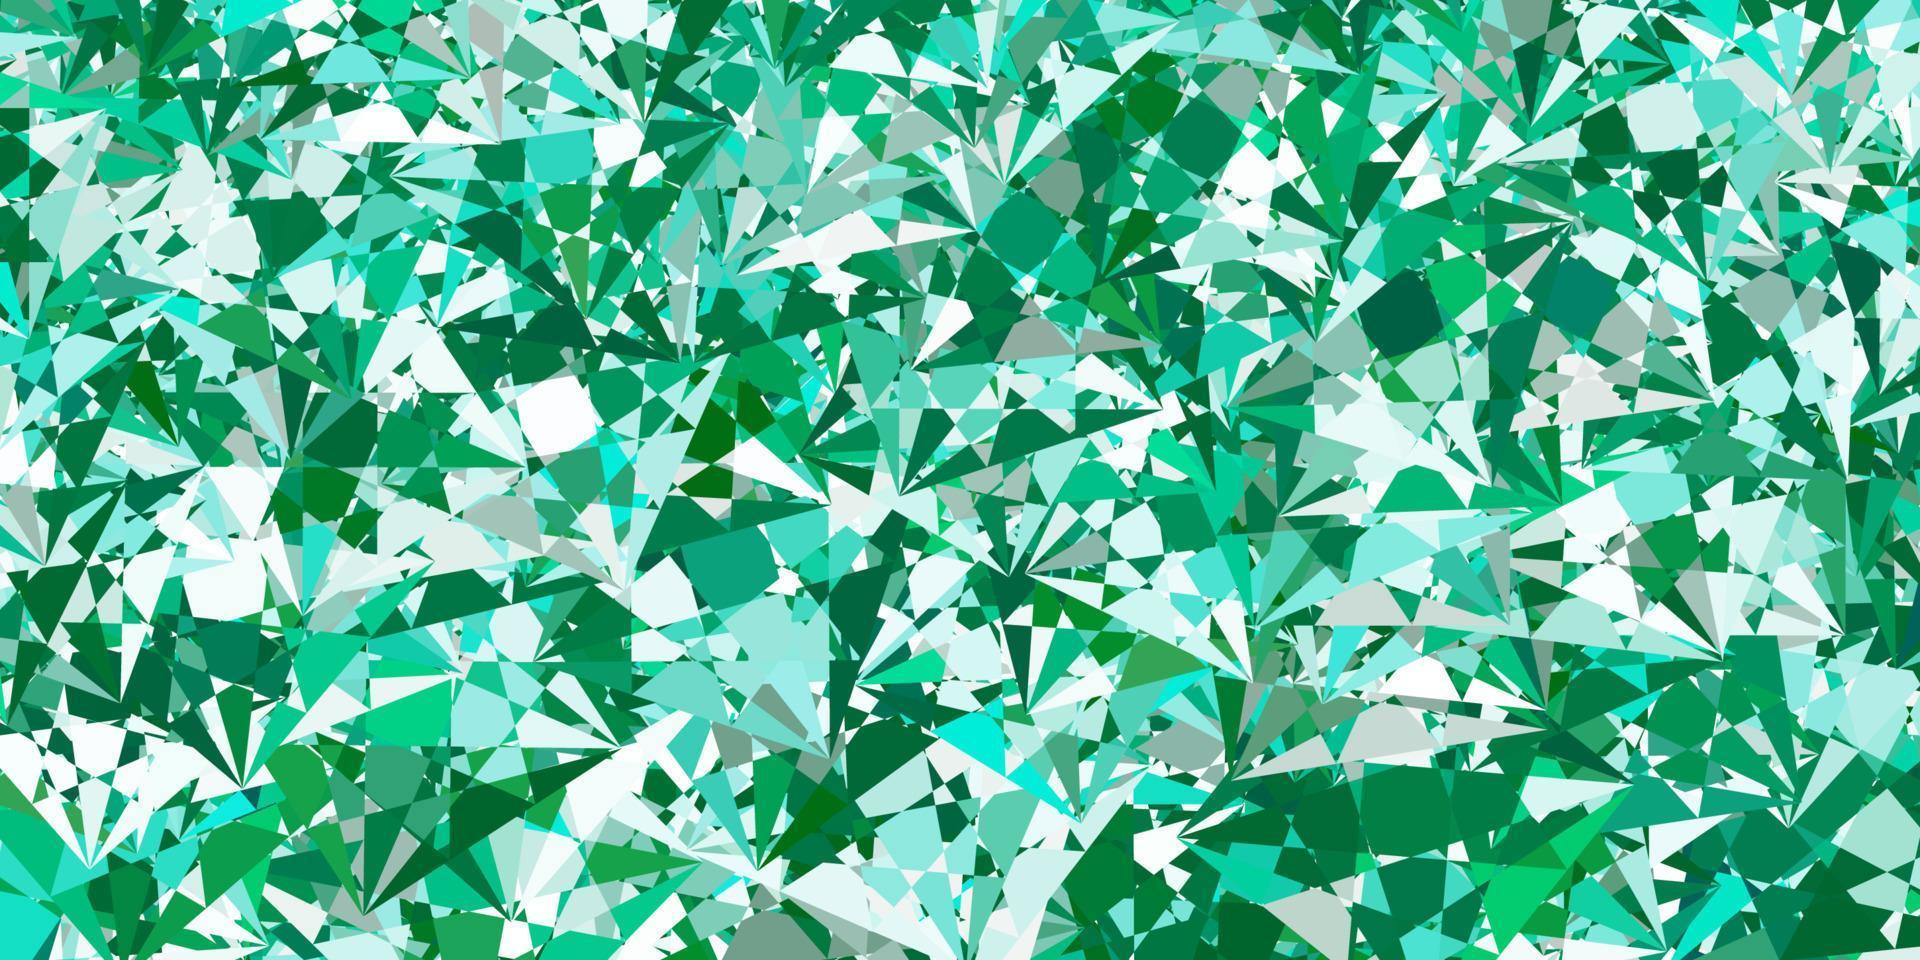 sfondo vettoriale verde chiaro con forme poligonali.